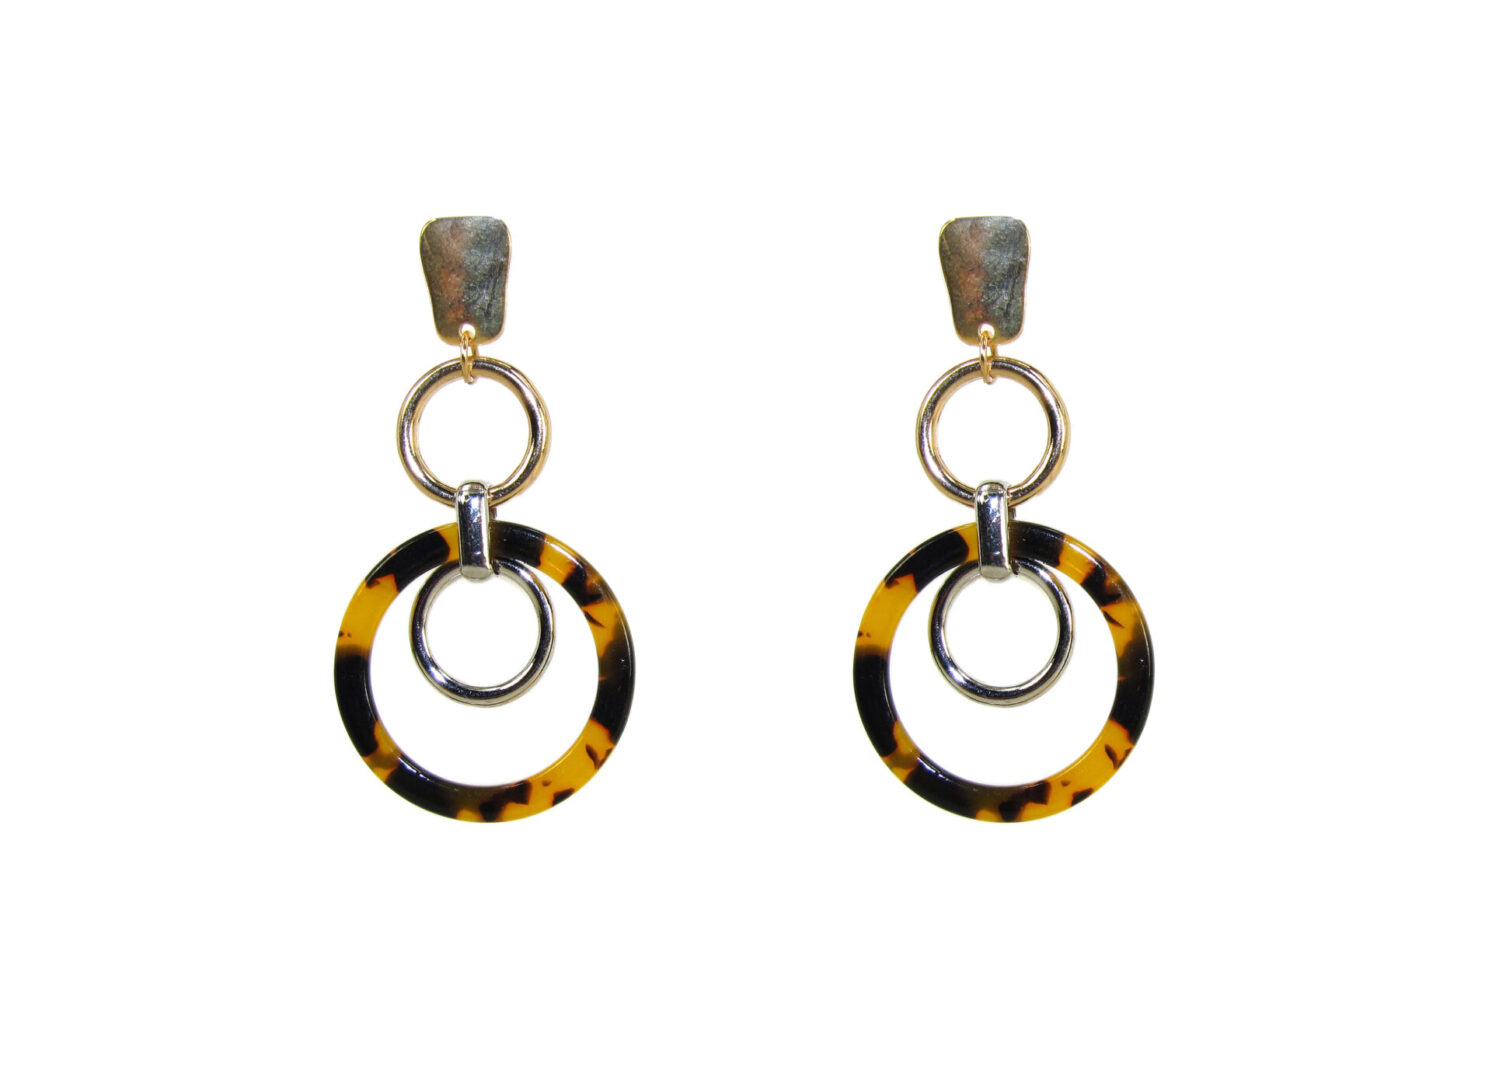 earrings with circular metal rings interlocking